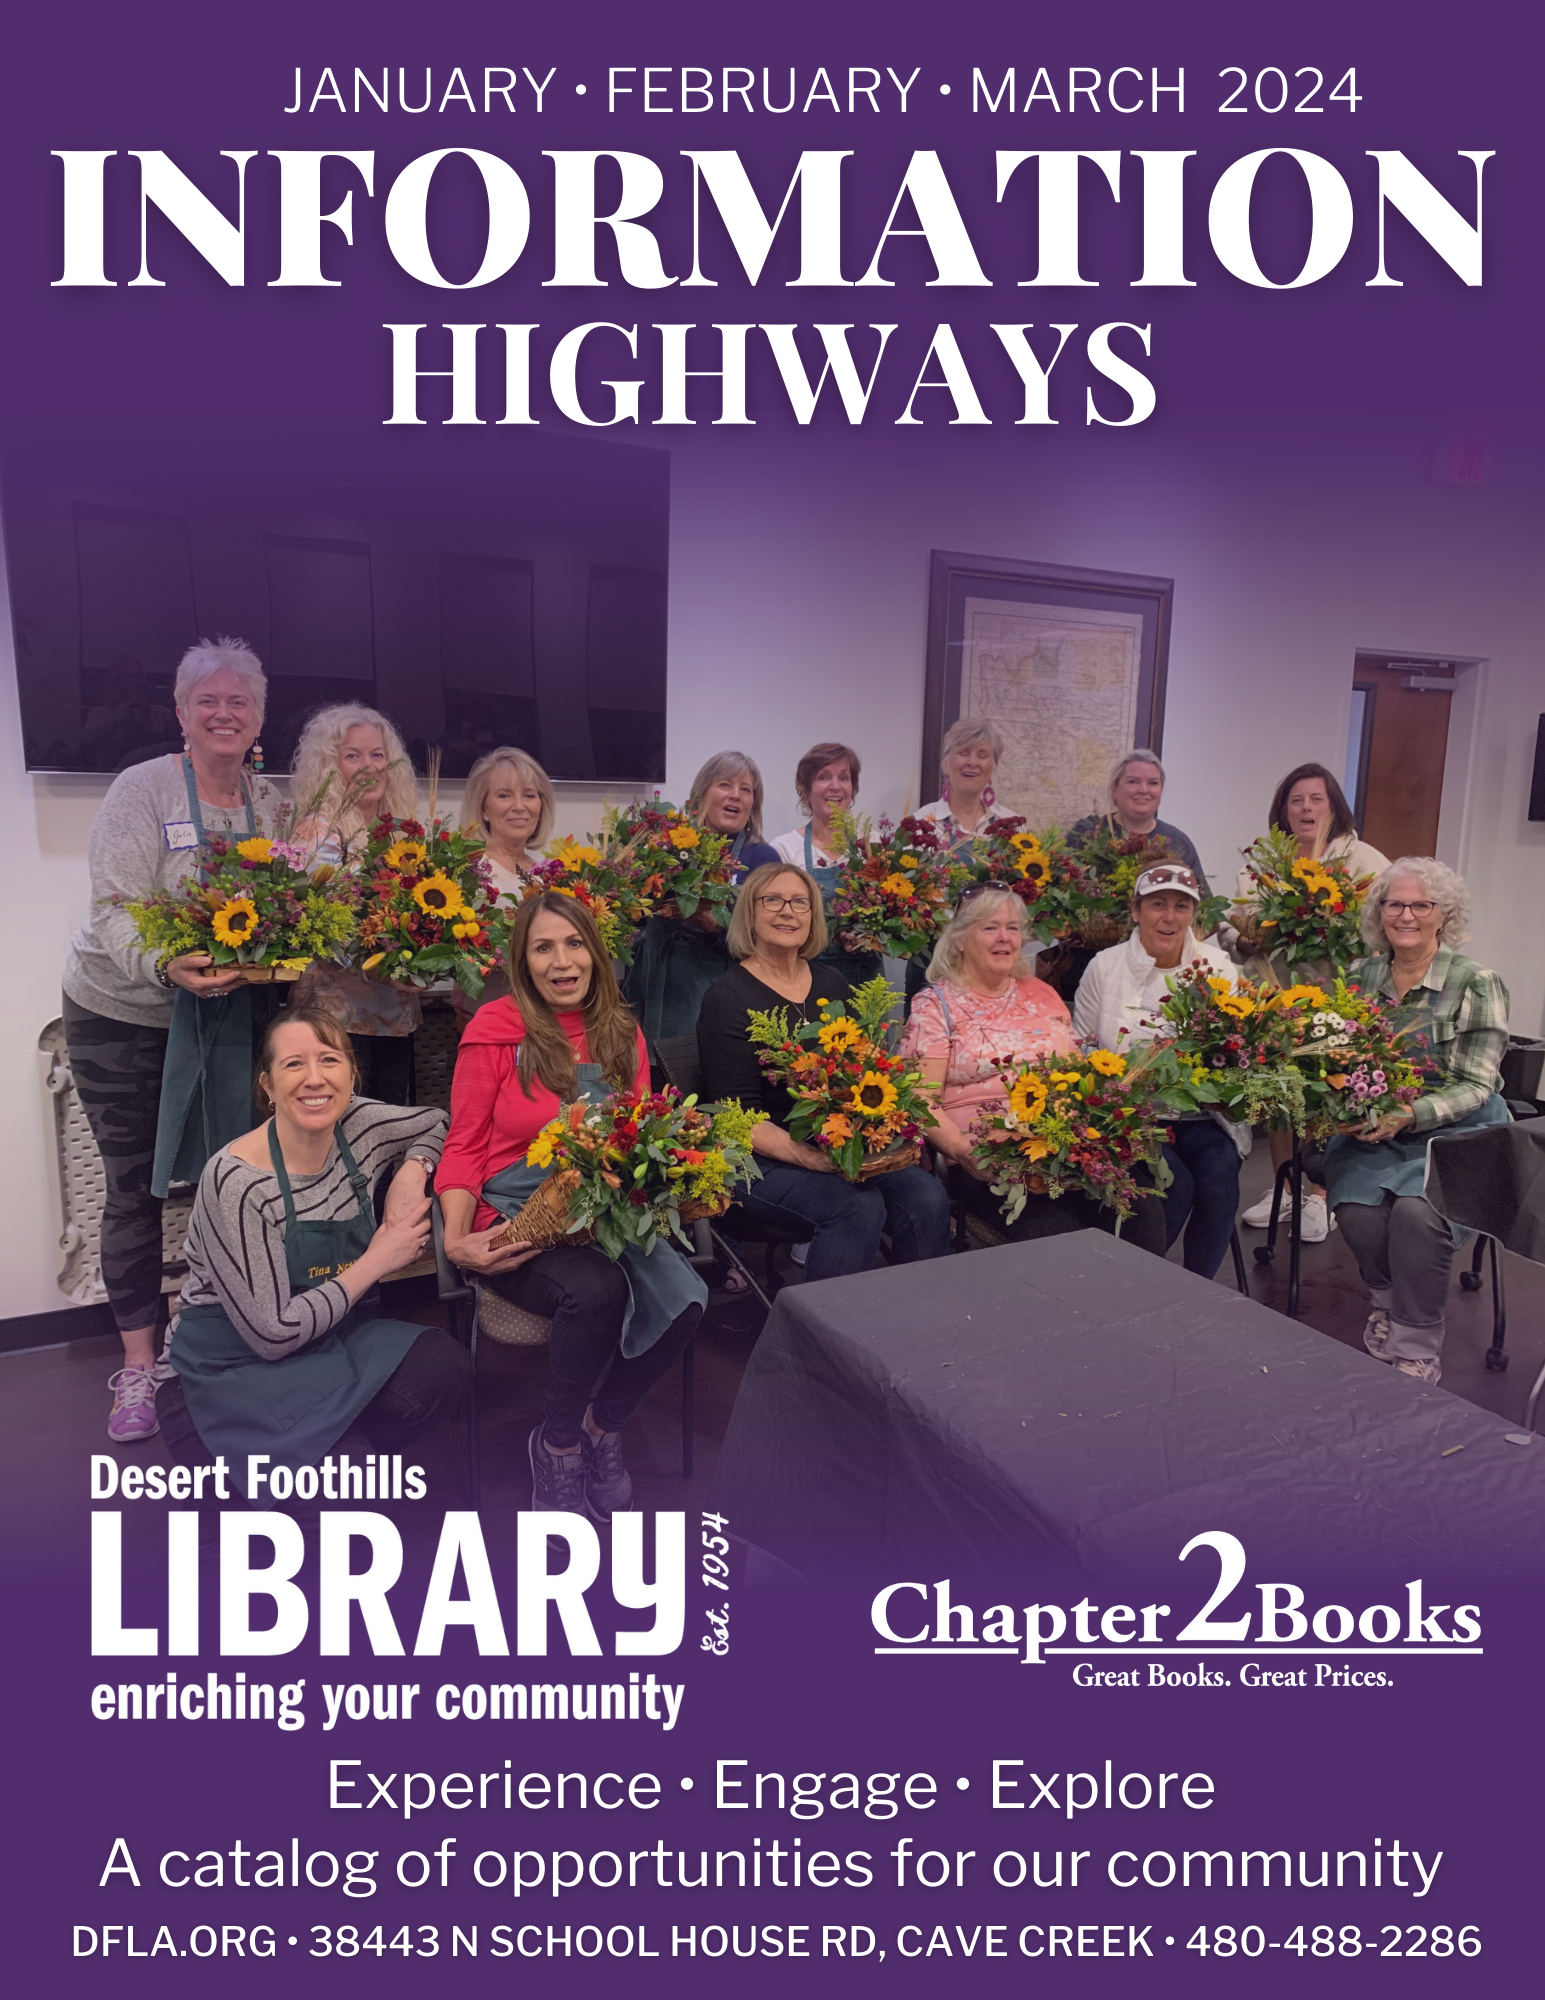 Information Highways brochure for the desert foothills library